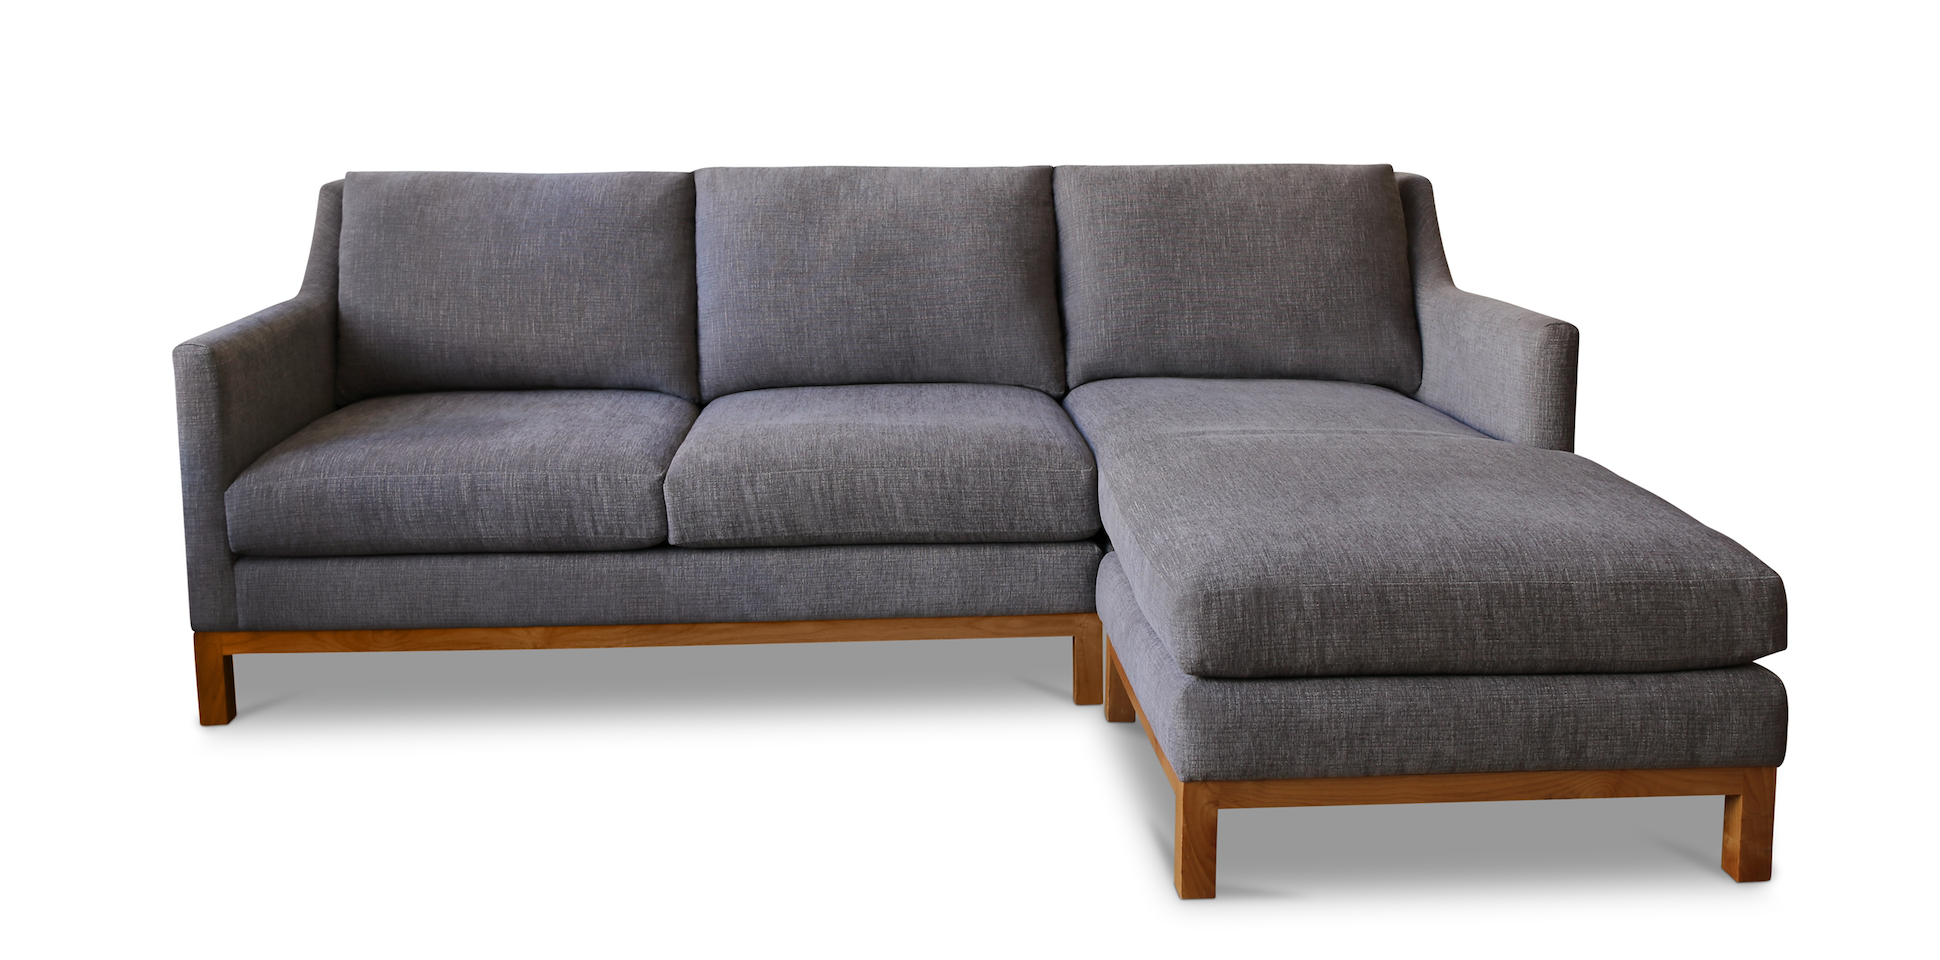 Huntley Sectional Sofa